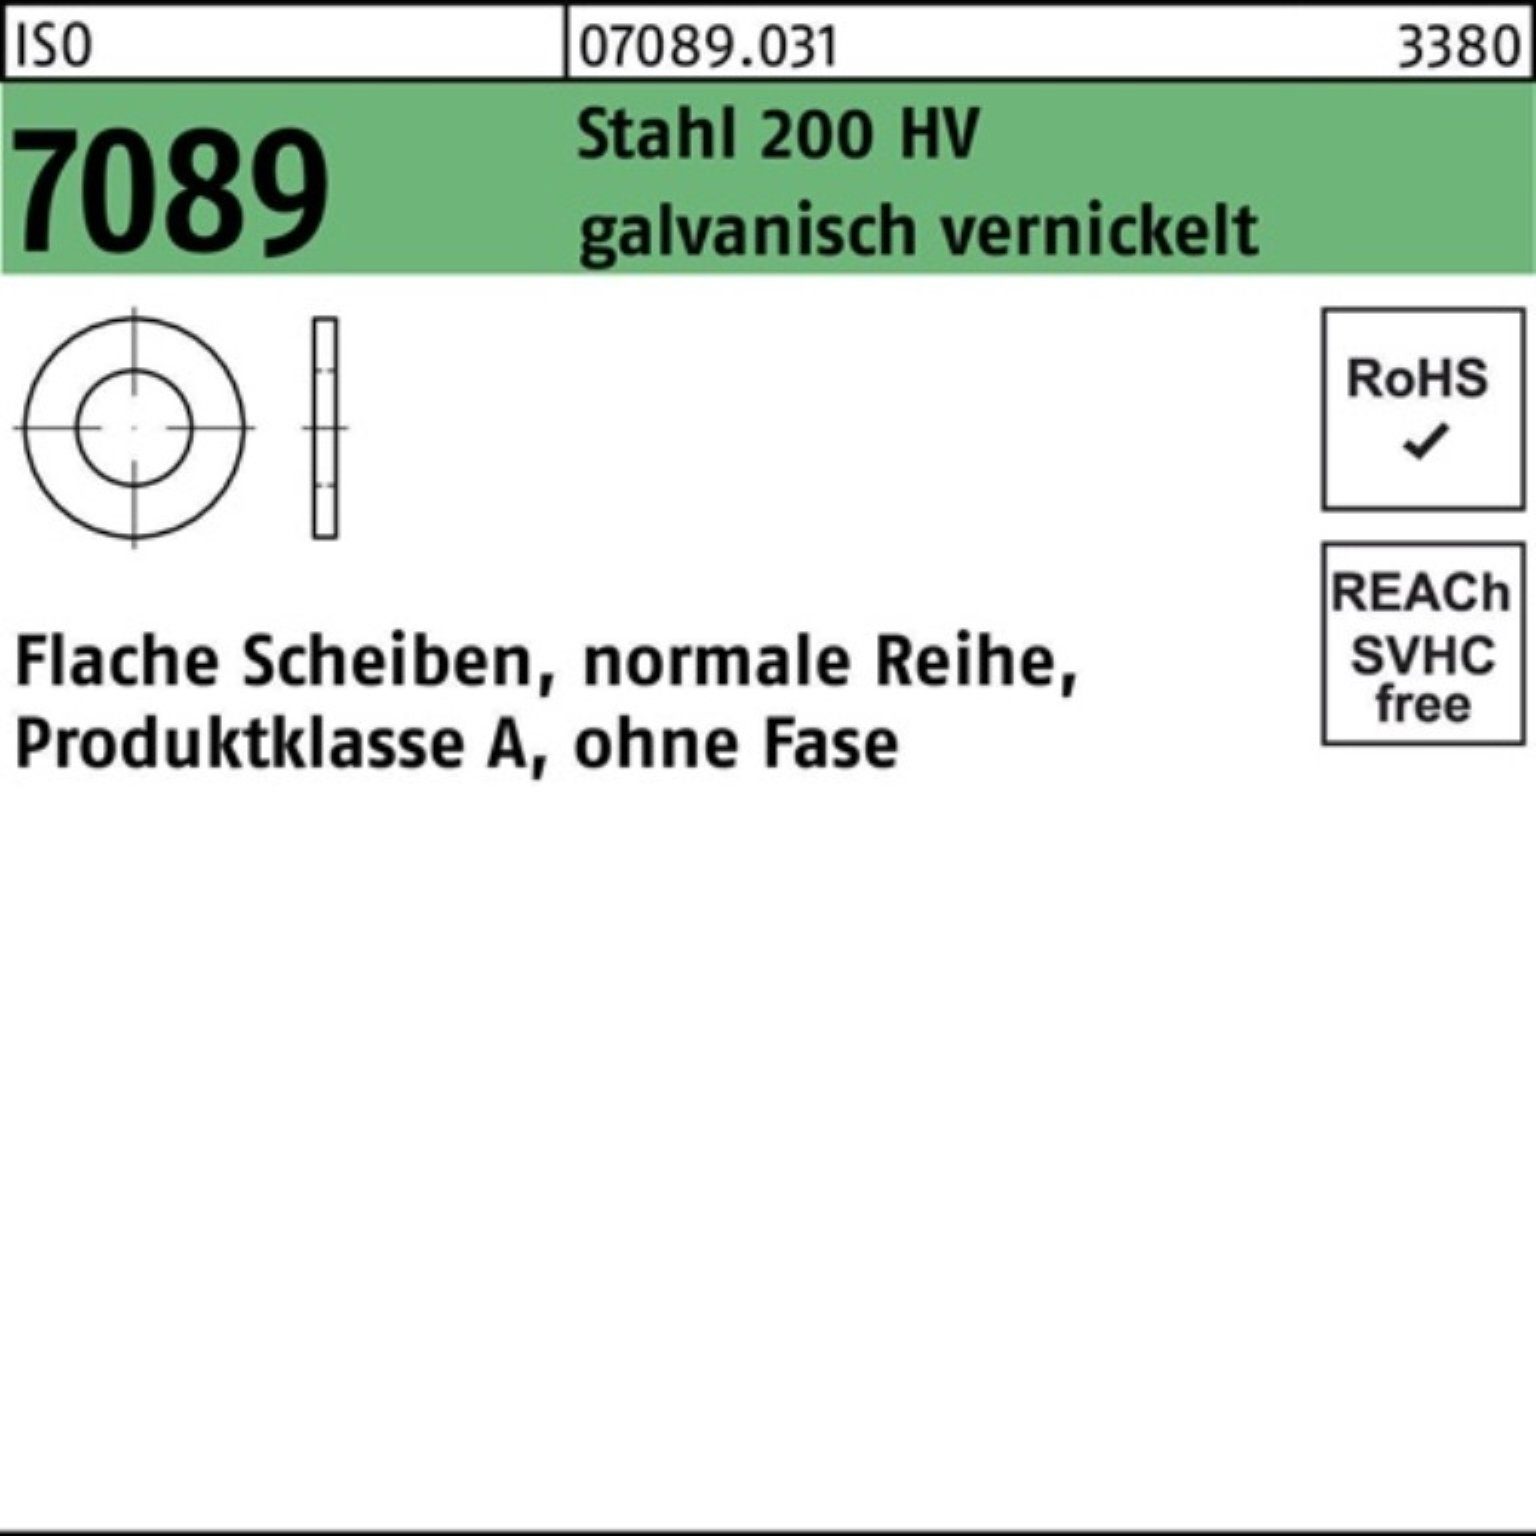 Bufab Unterlegscheibe 1000er HV verni 4 Stahl Unterlegscheibe ISO 7089 galv. o.Fase Pack 200